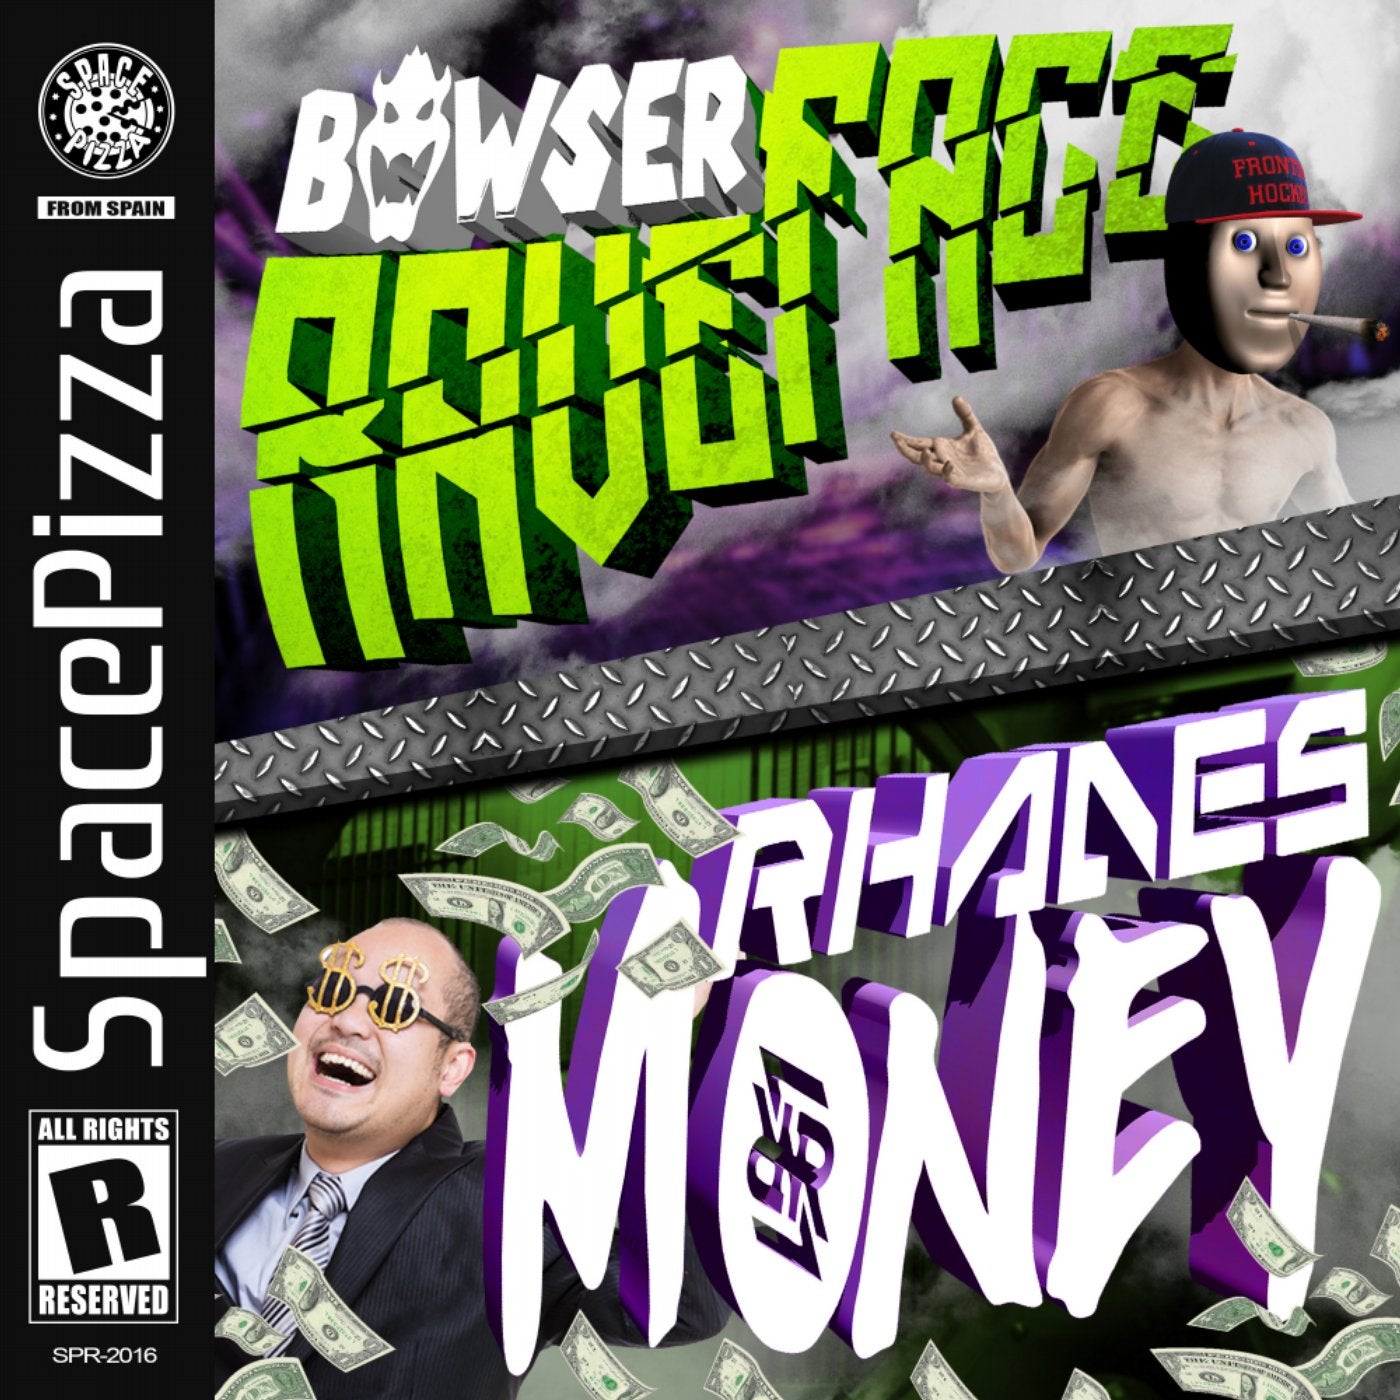 Rave Face & Money